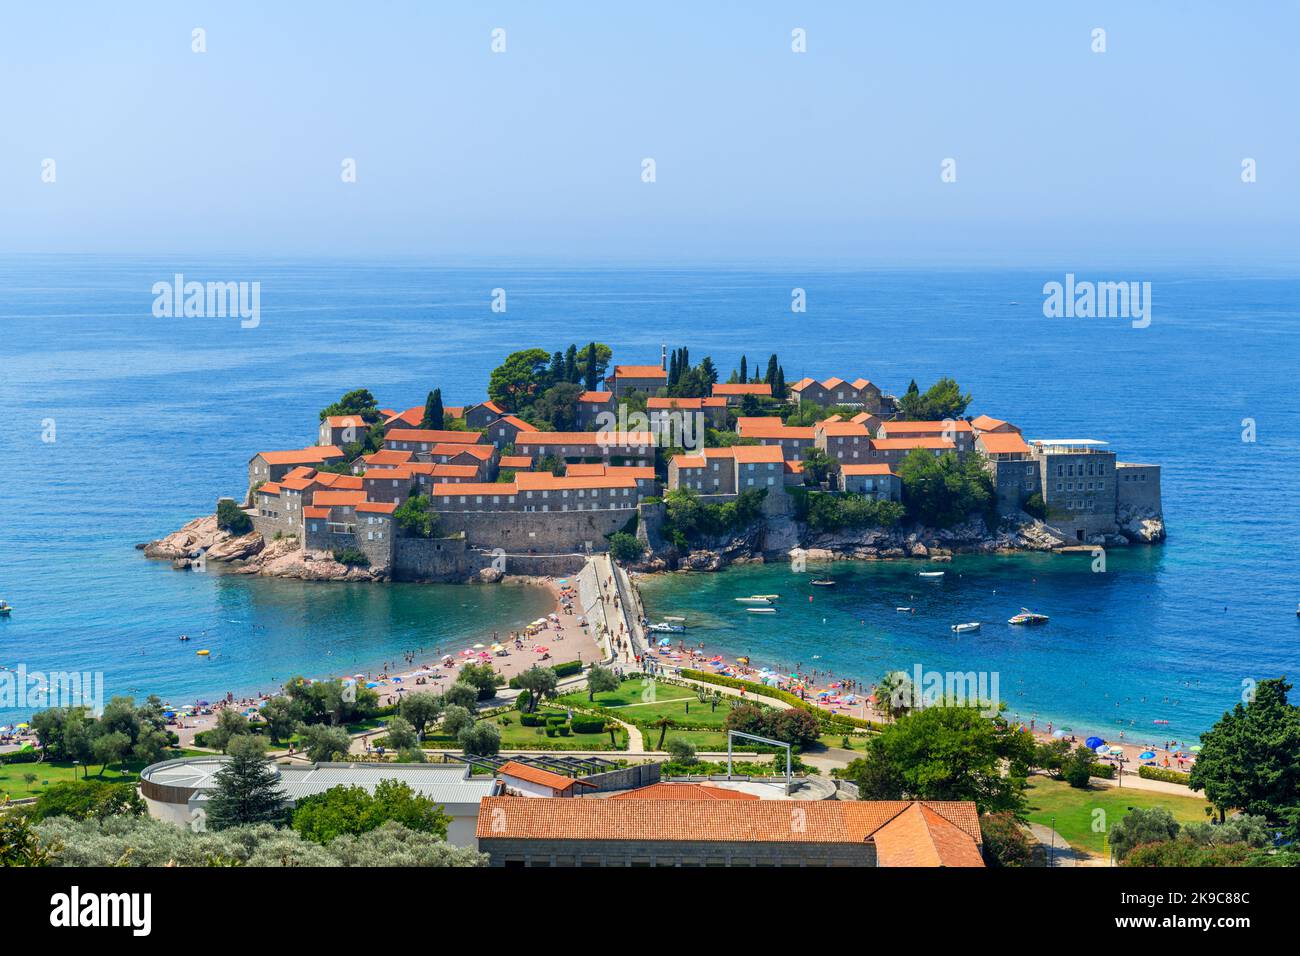 View of the island resort of Sveti Stefan, Montenegro Stock Photo